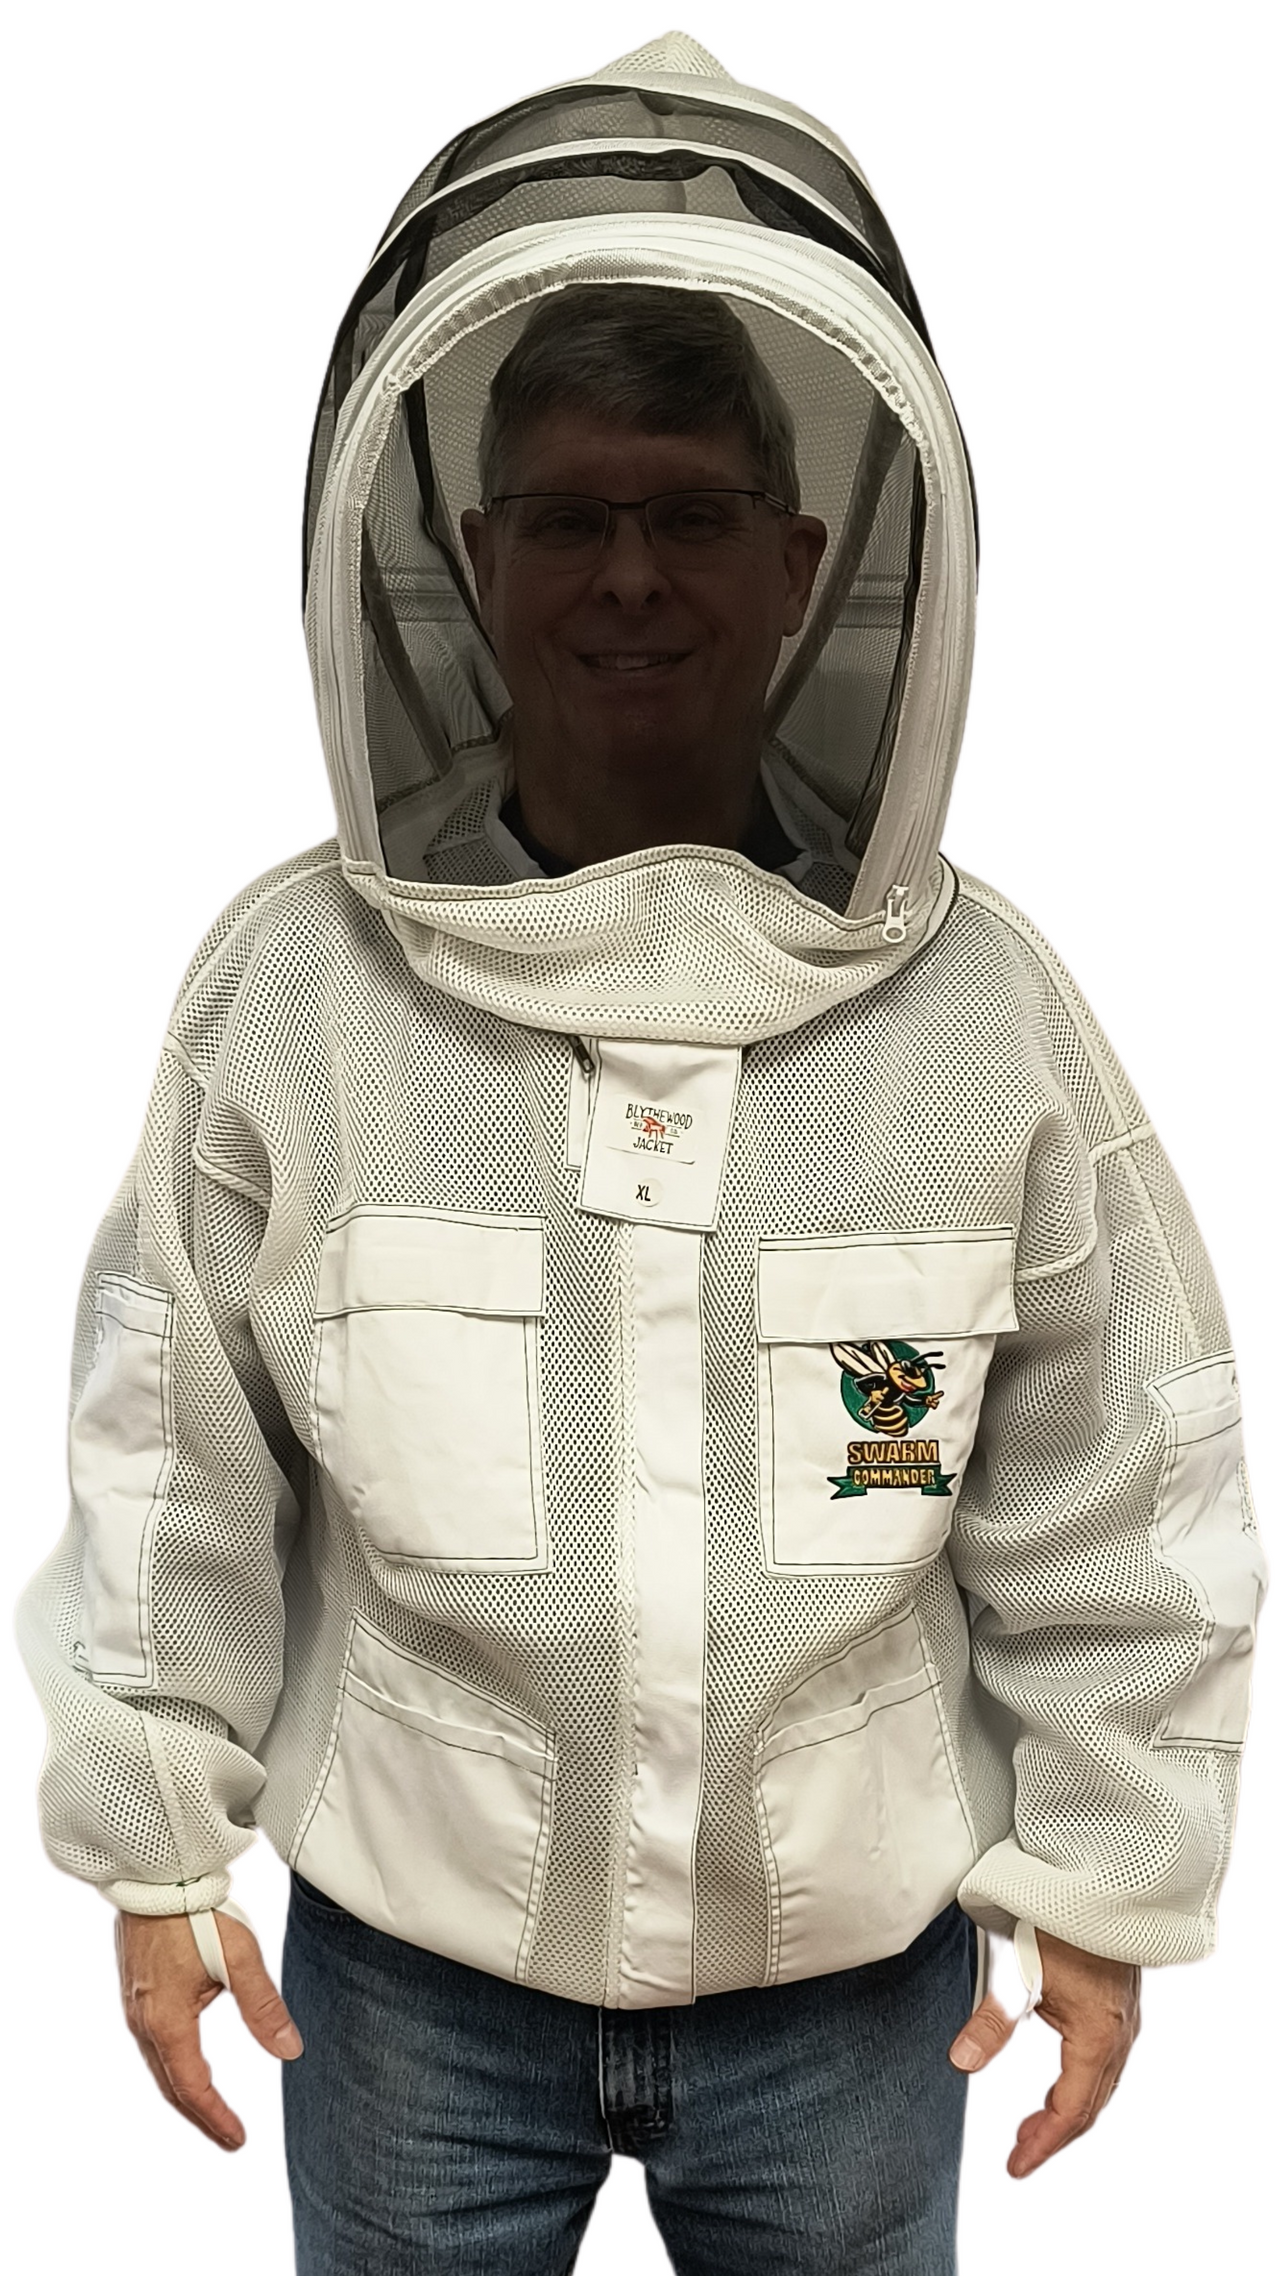 Swarm Commander Ultra Mesh Beekeeping Jackets - XS to 5XL